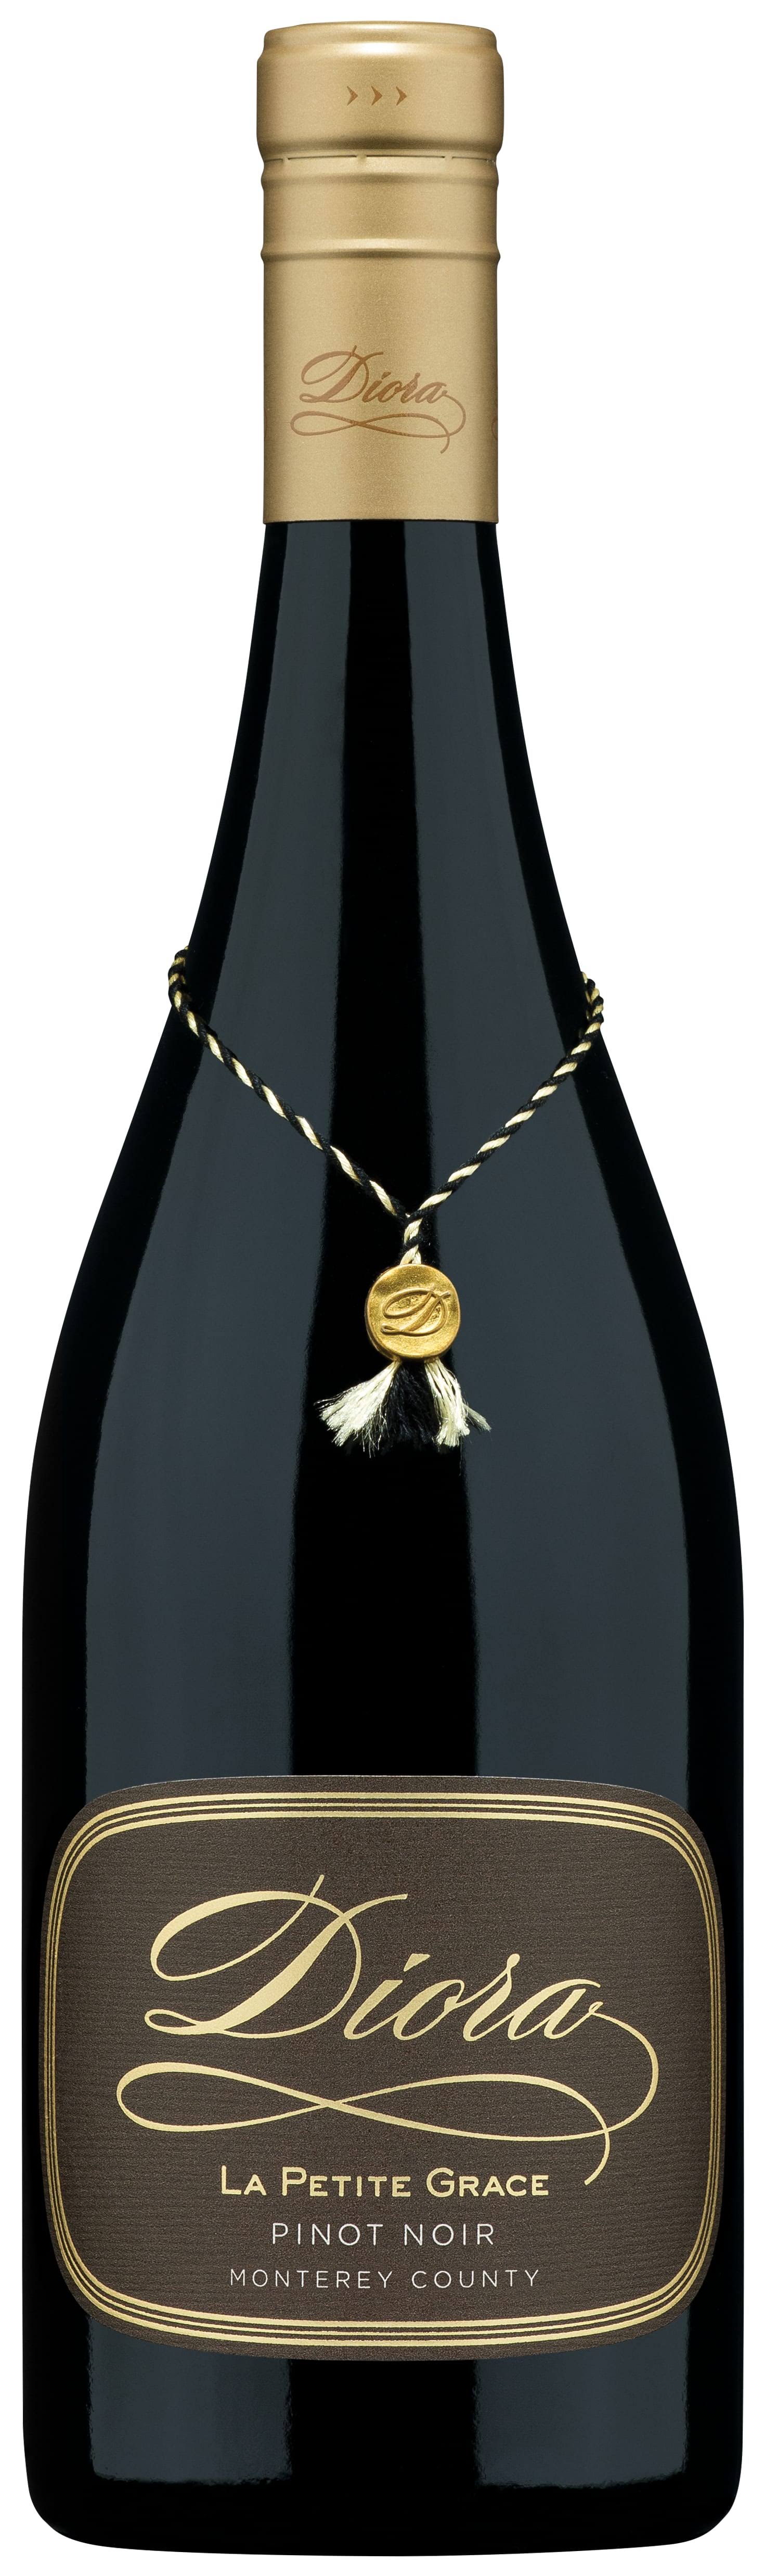 Diora Pinot Noir (Vintage Varies) - 750 ml bottle